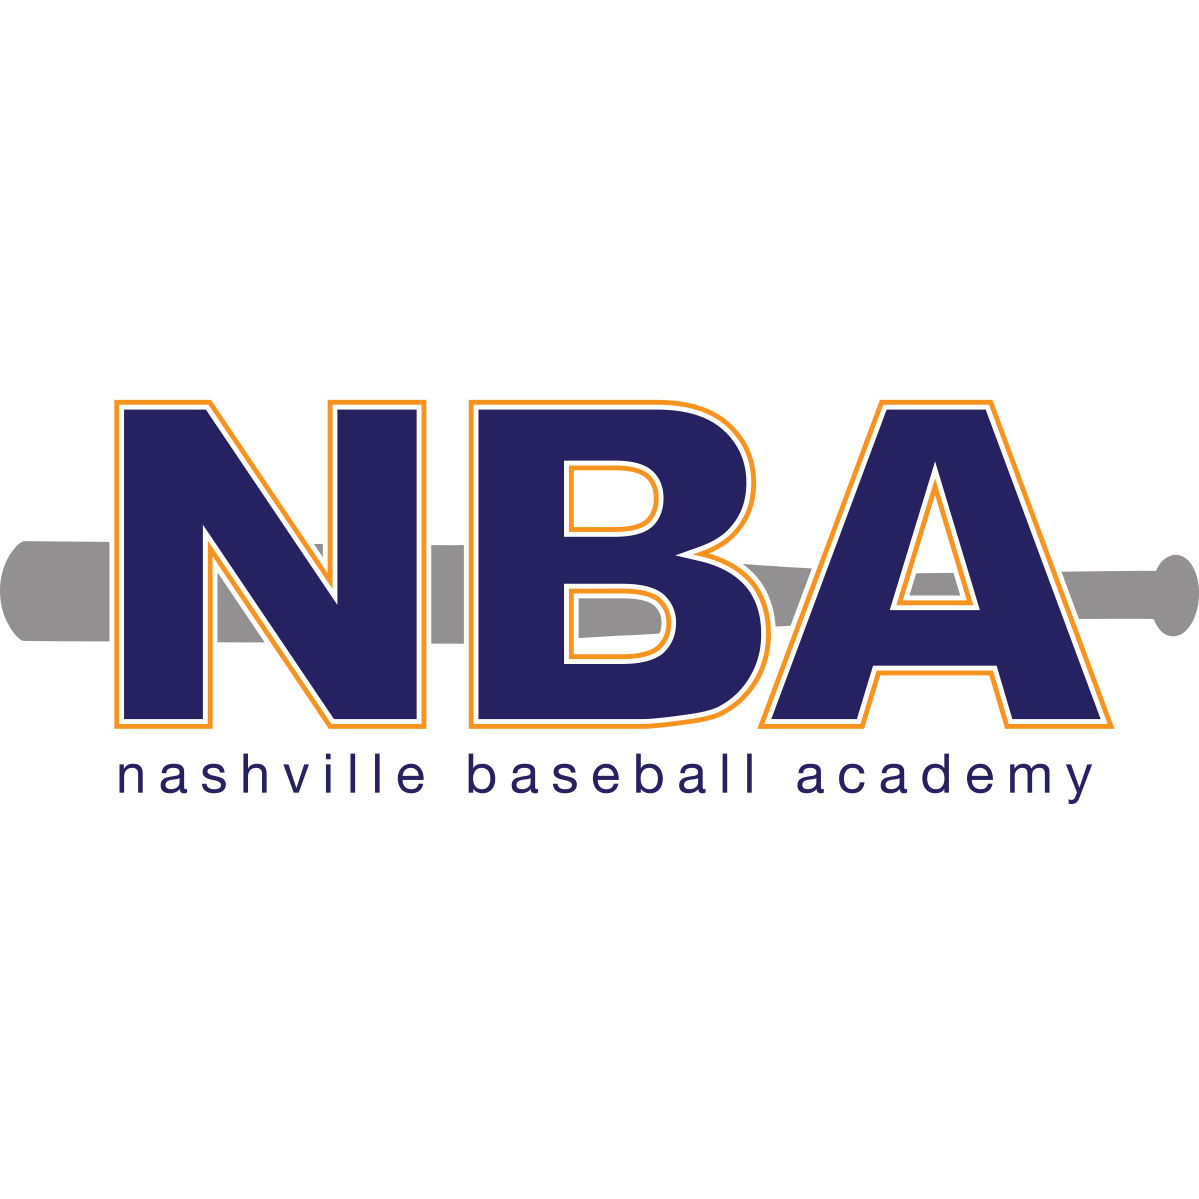 Nashville Baseball Academy - Nashville, TN 37211 - (615)837-5858 | ShowMeLocal.com